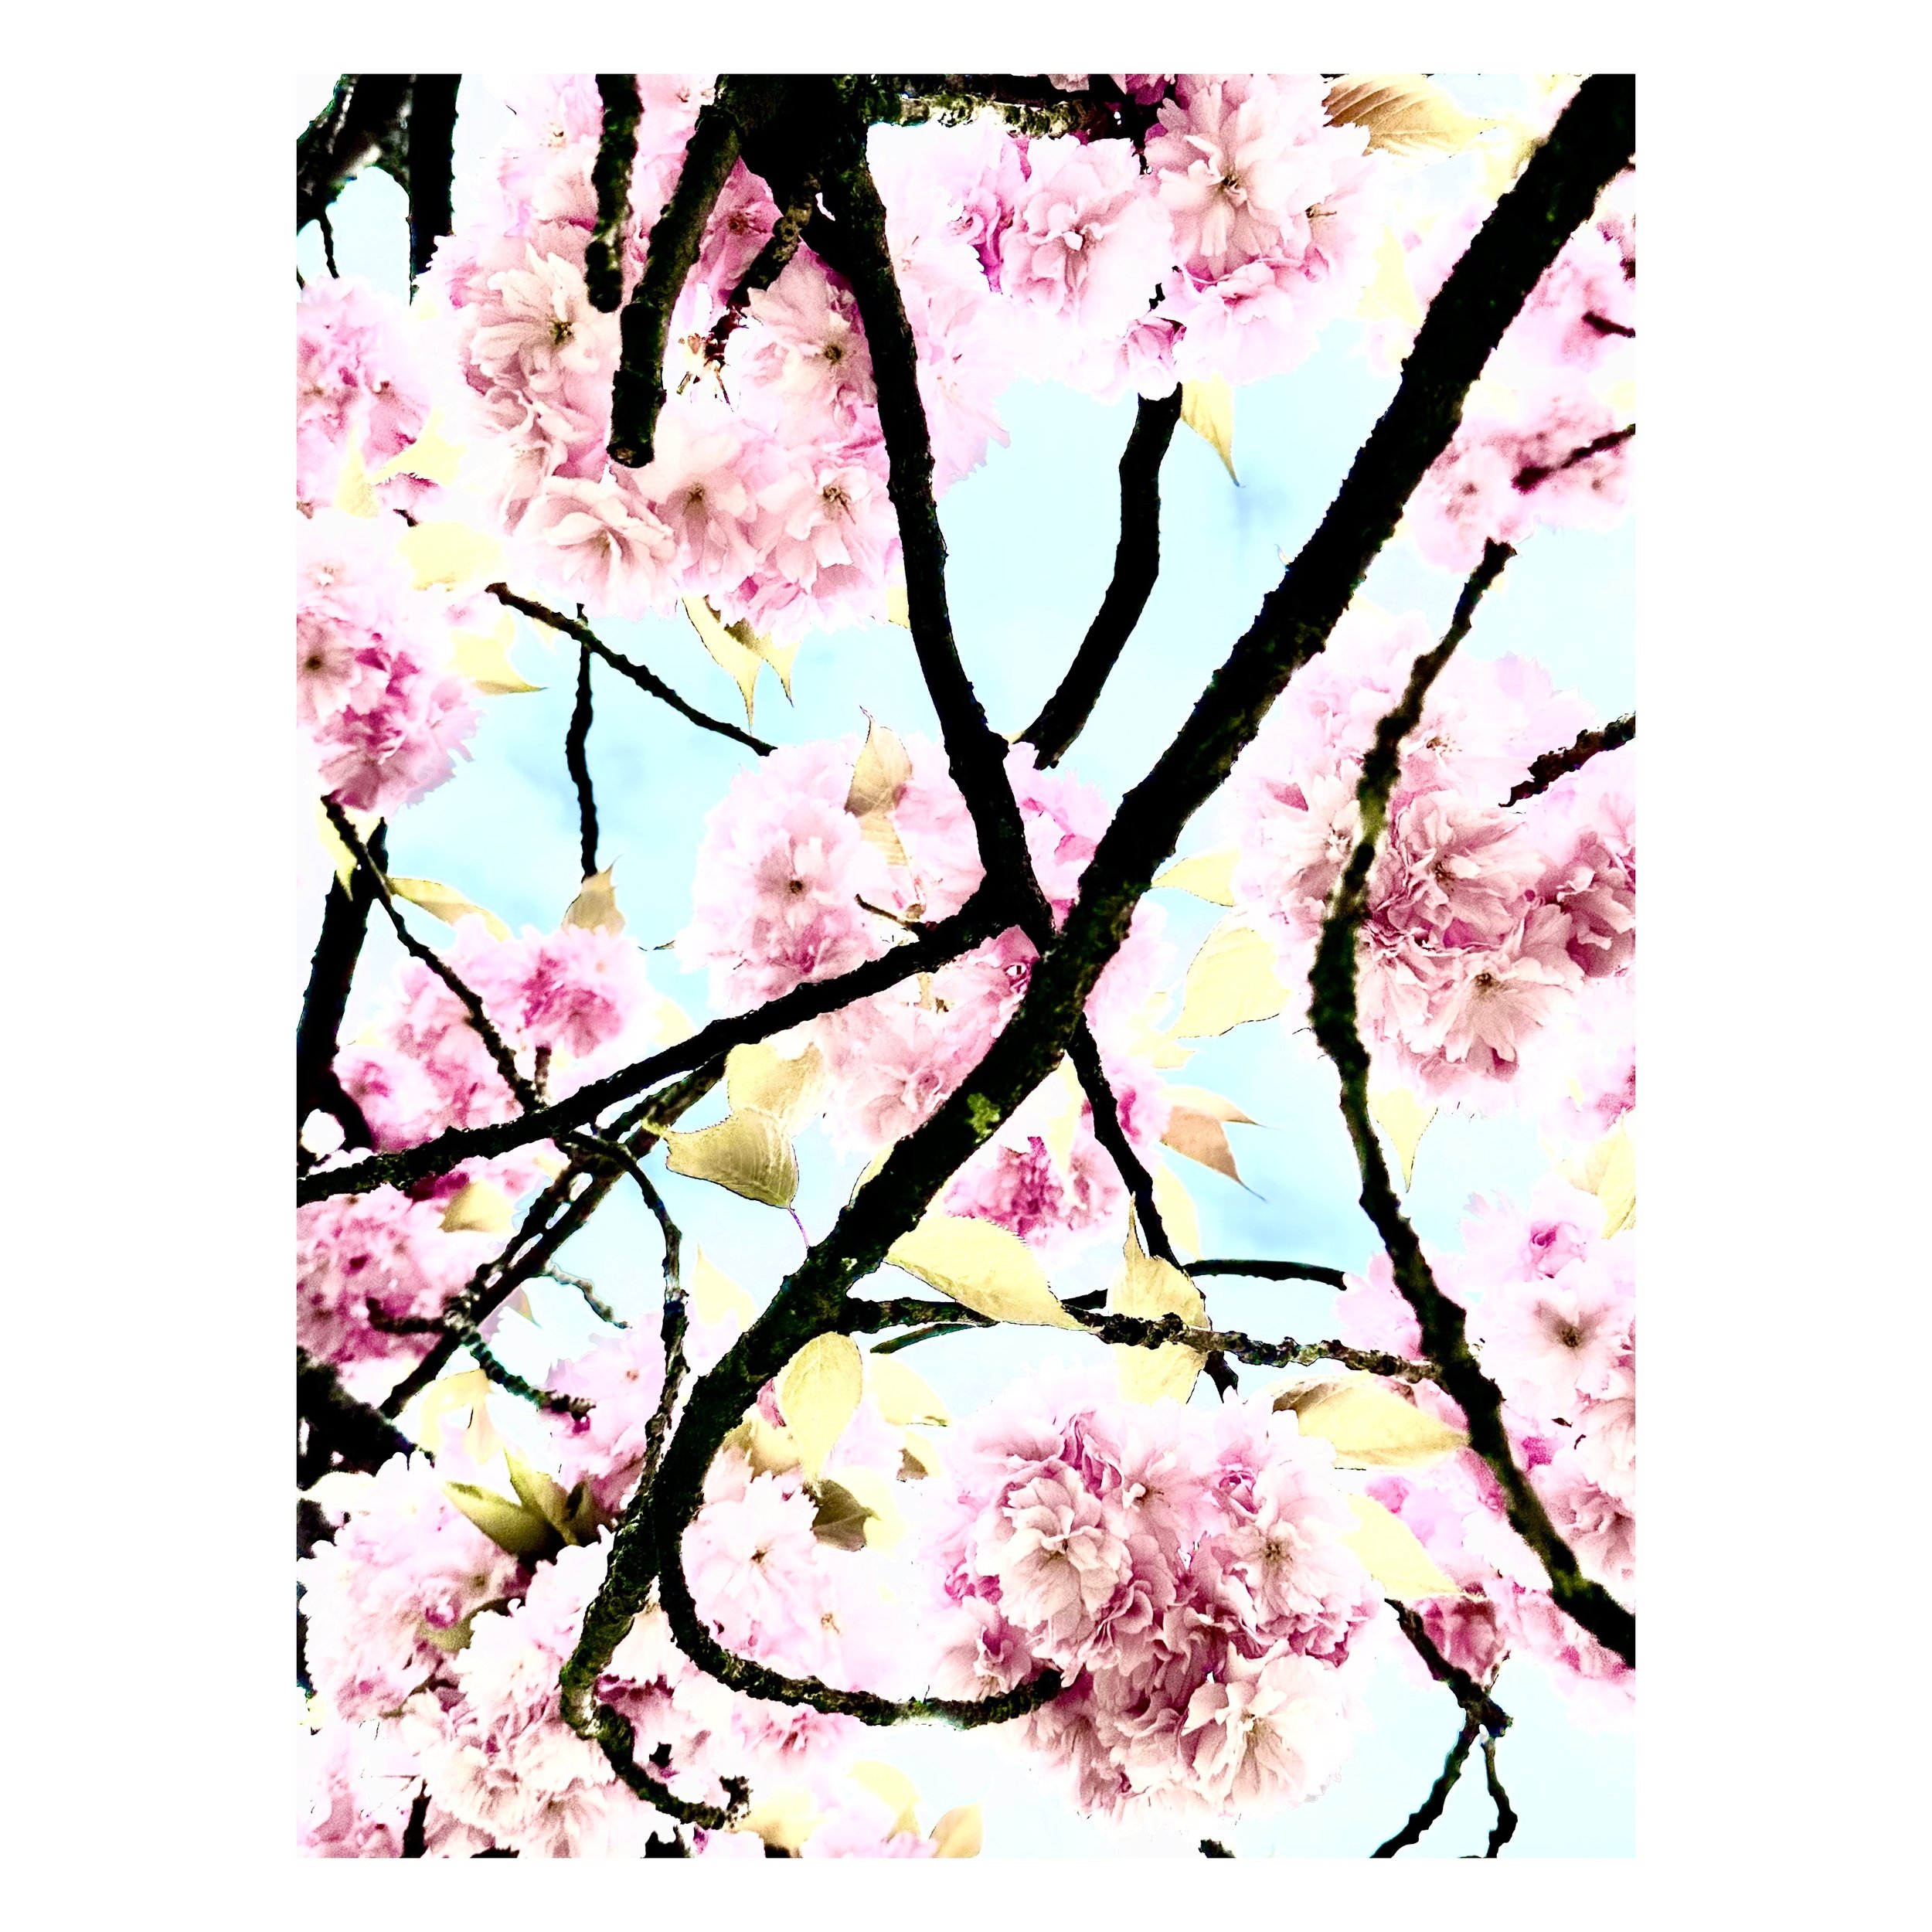 Spring by SOPHIE LE GENDRE @sophie_le_gendre⁠
*
#flowerphotographer #bloom #artvegetal #flowerphotography #flower #artprint #naturelovers #inspiredbynature #photoagency #photoagent #printforsale #parisagency #valeriepaumelleagent #sophielegendre